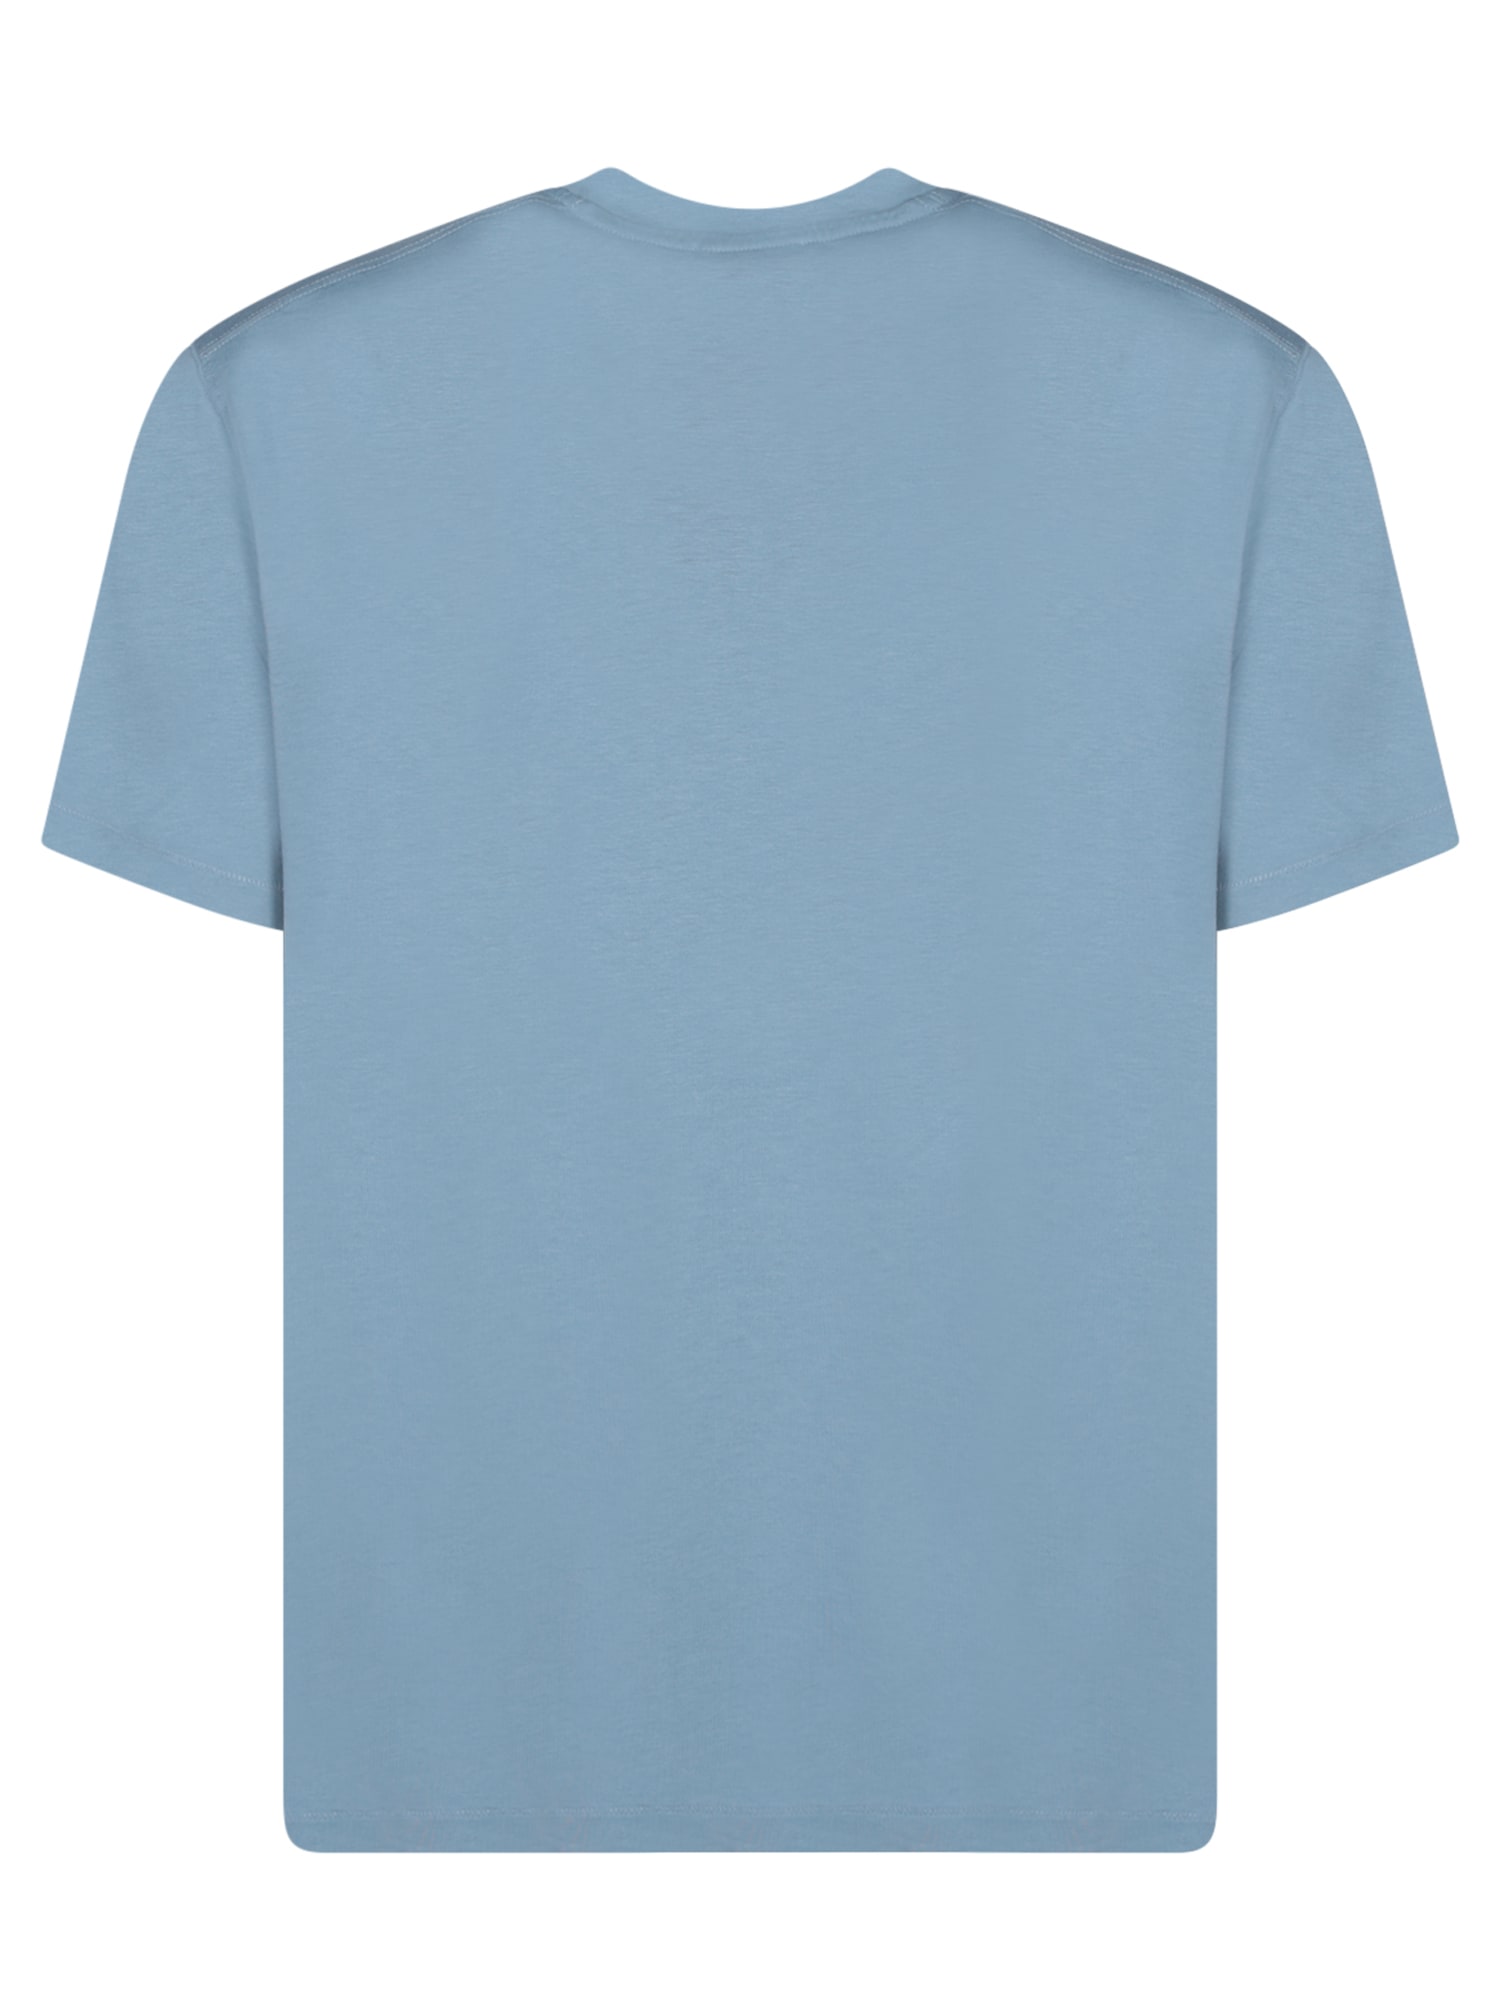 Shop Tom Ford Basic Light Blue T-shirt